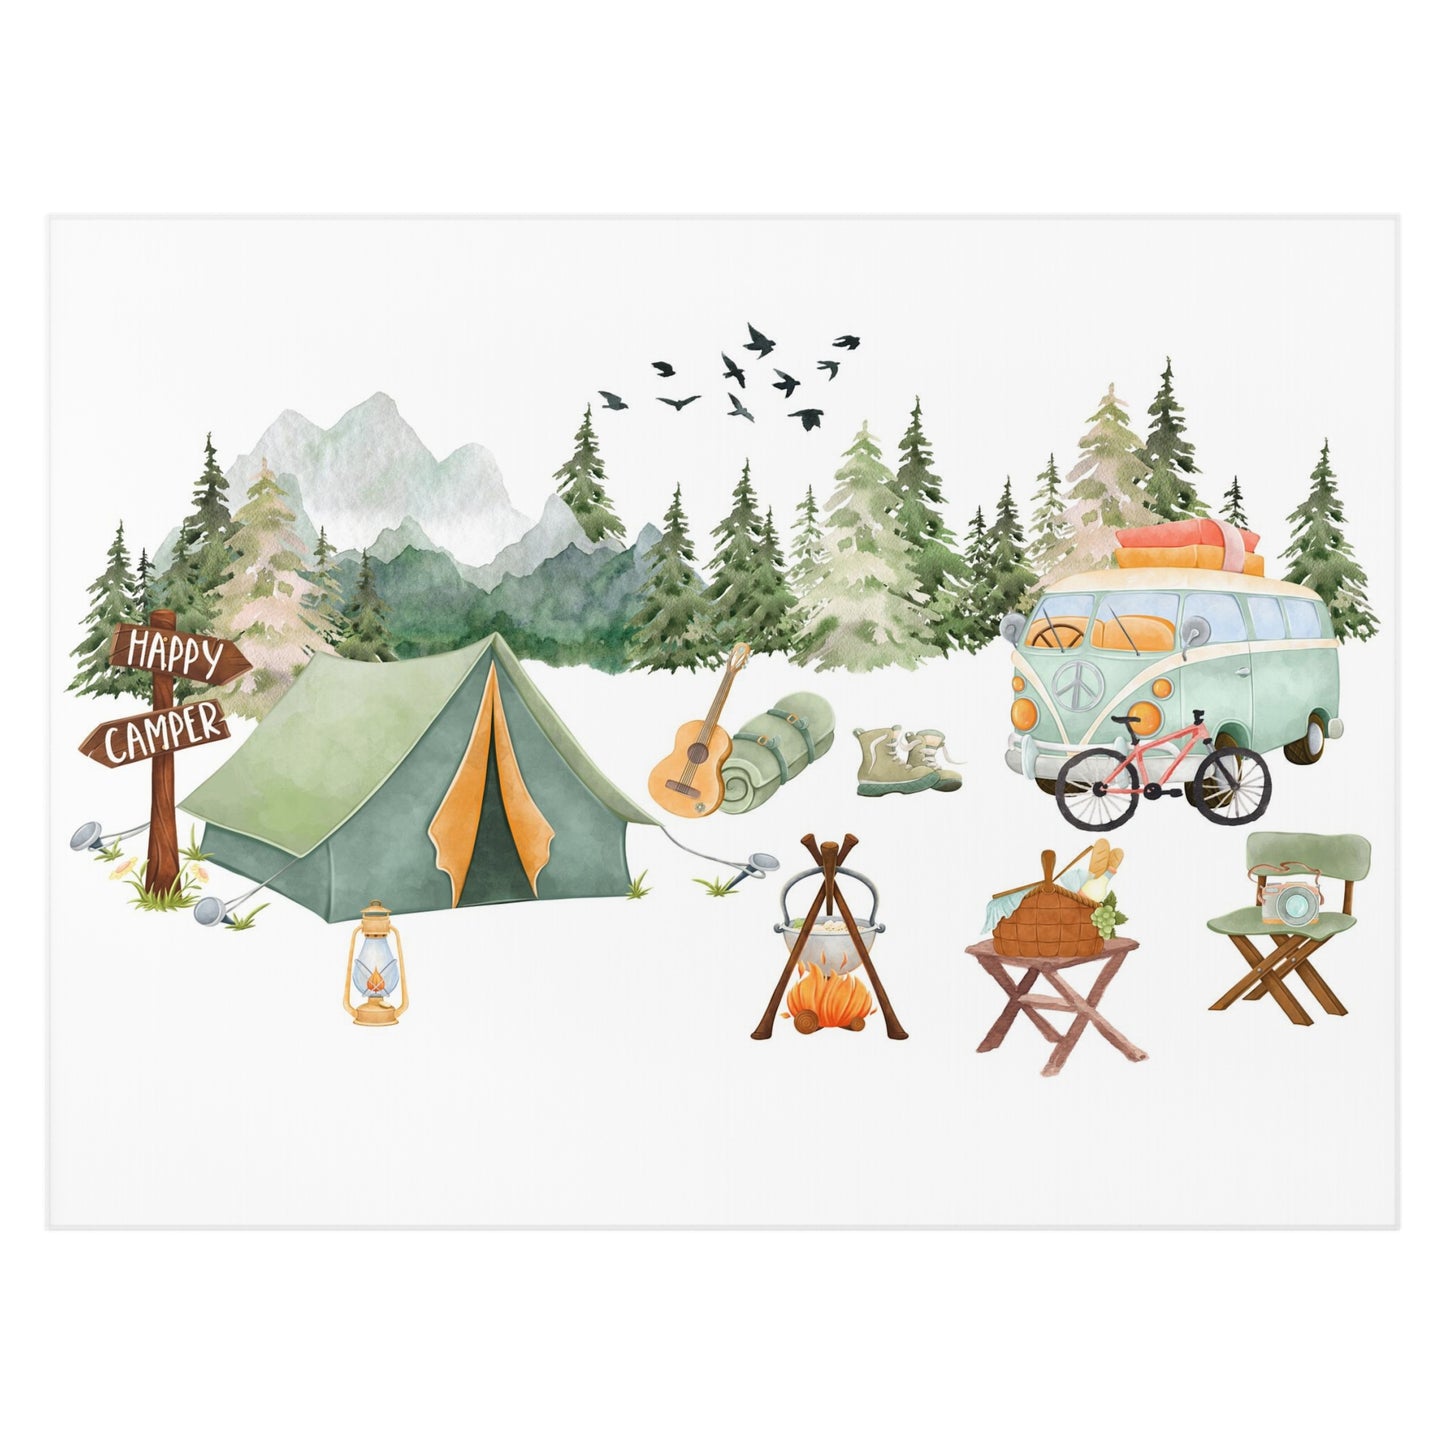 Camping rug, Anti-Slip backing, Happy camper nursery decor - Outdoor Adventures